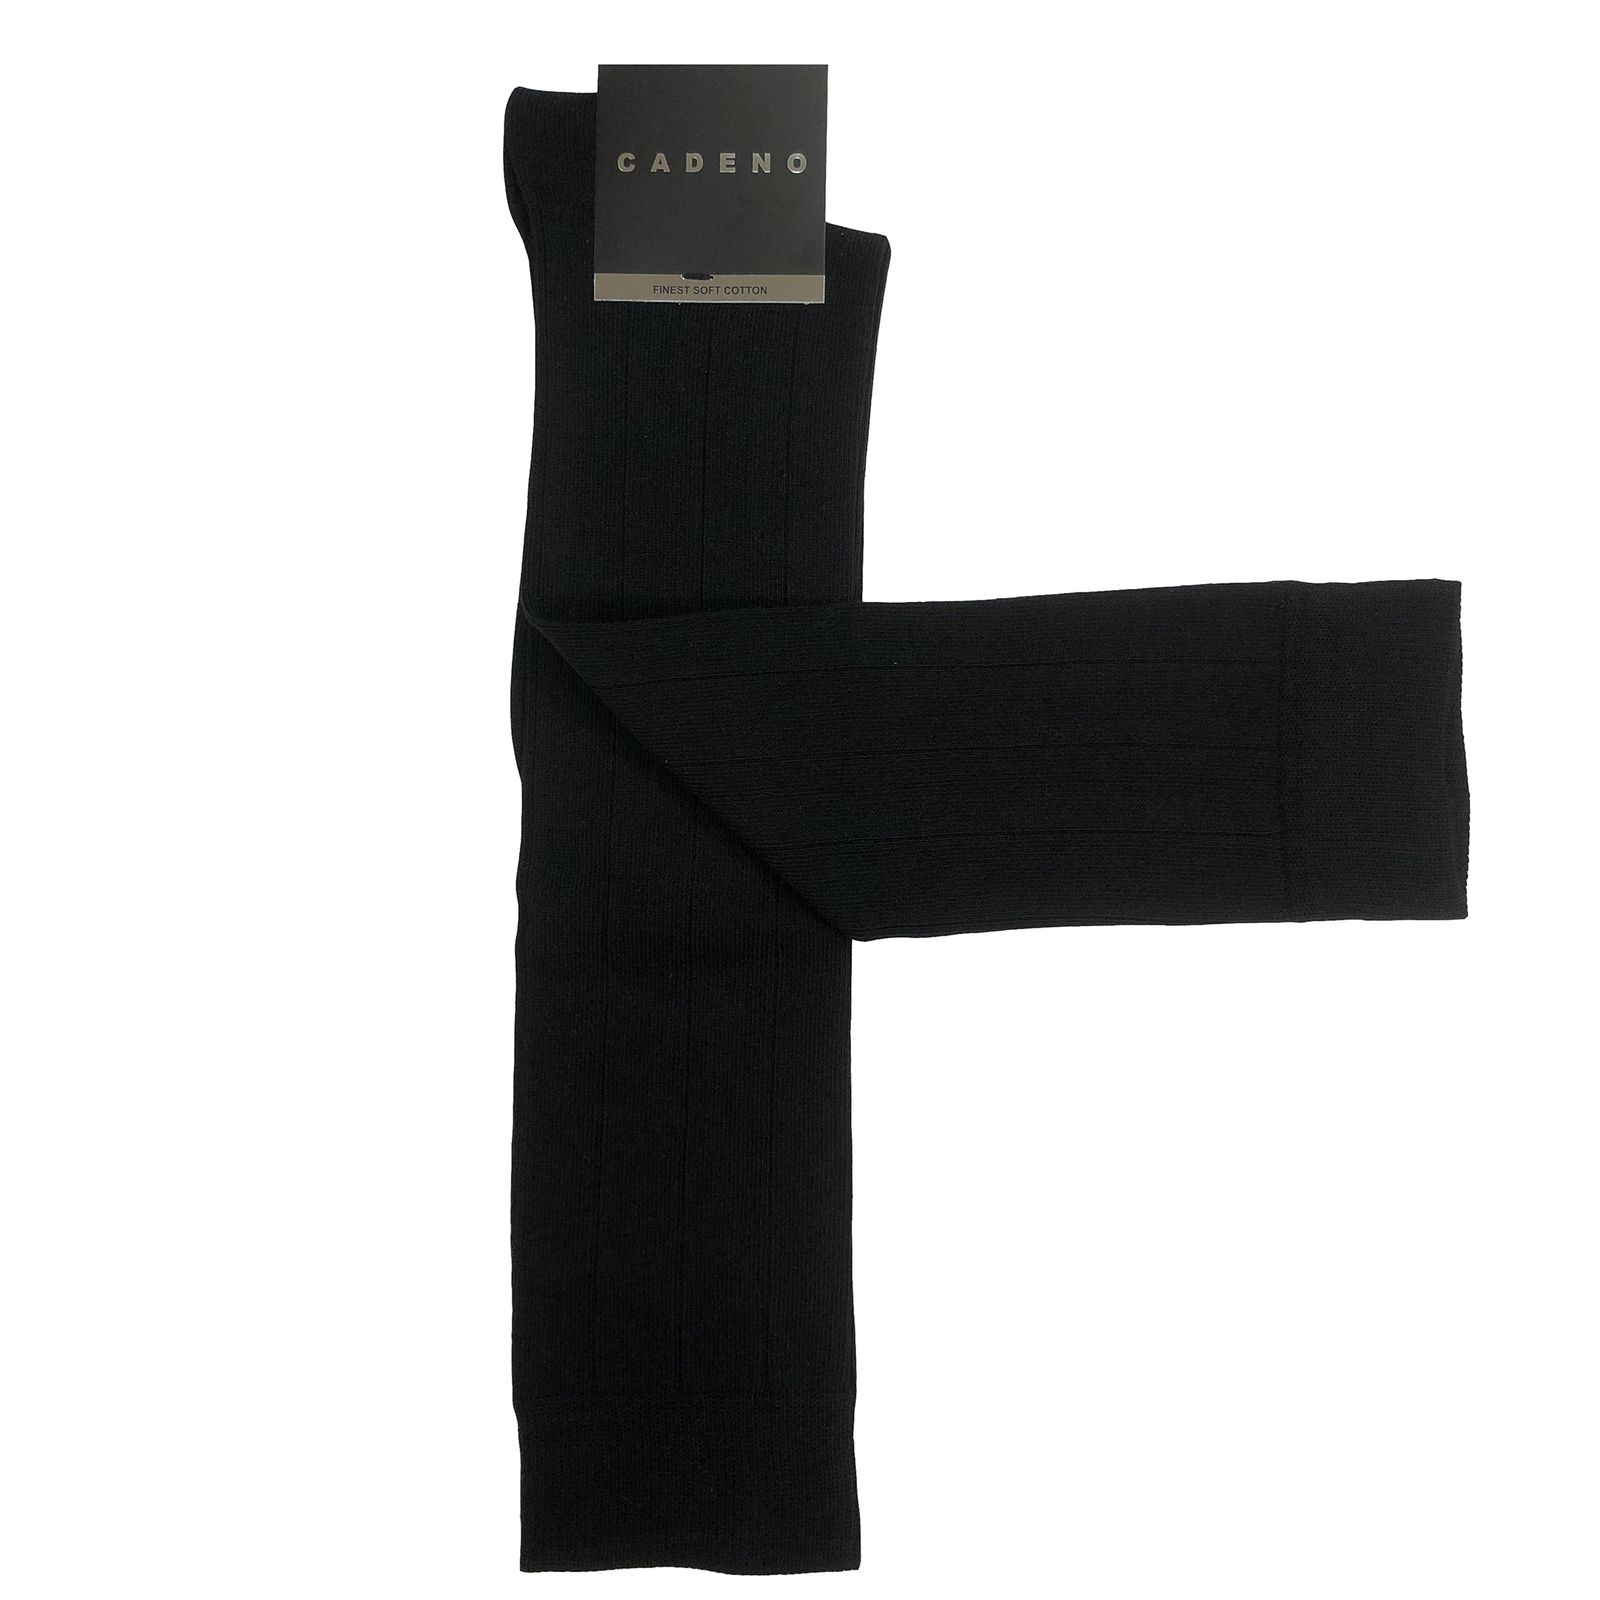 جوراب مردانه کادنو مدل CASE1001 رنگ مشکی -  - 2